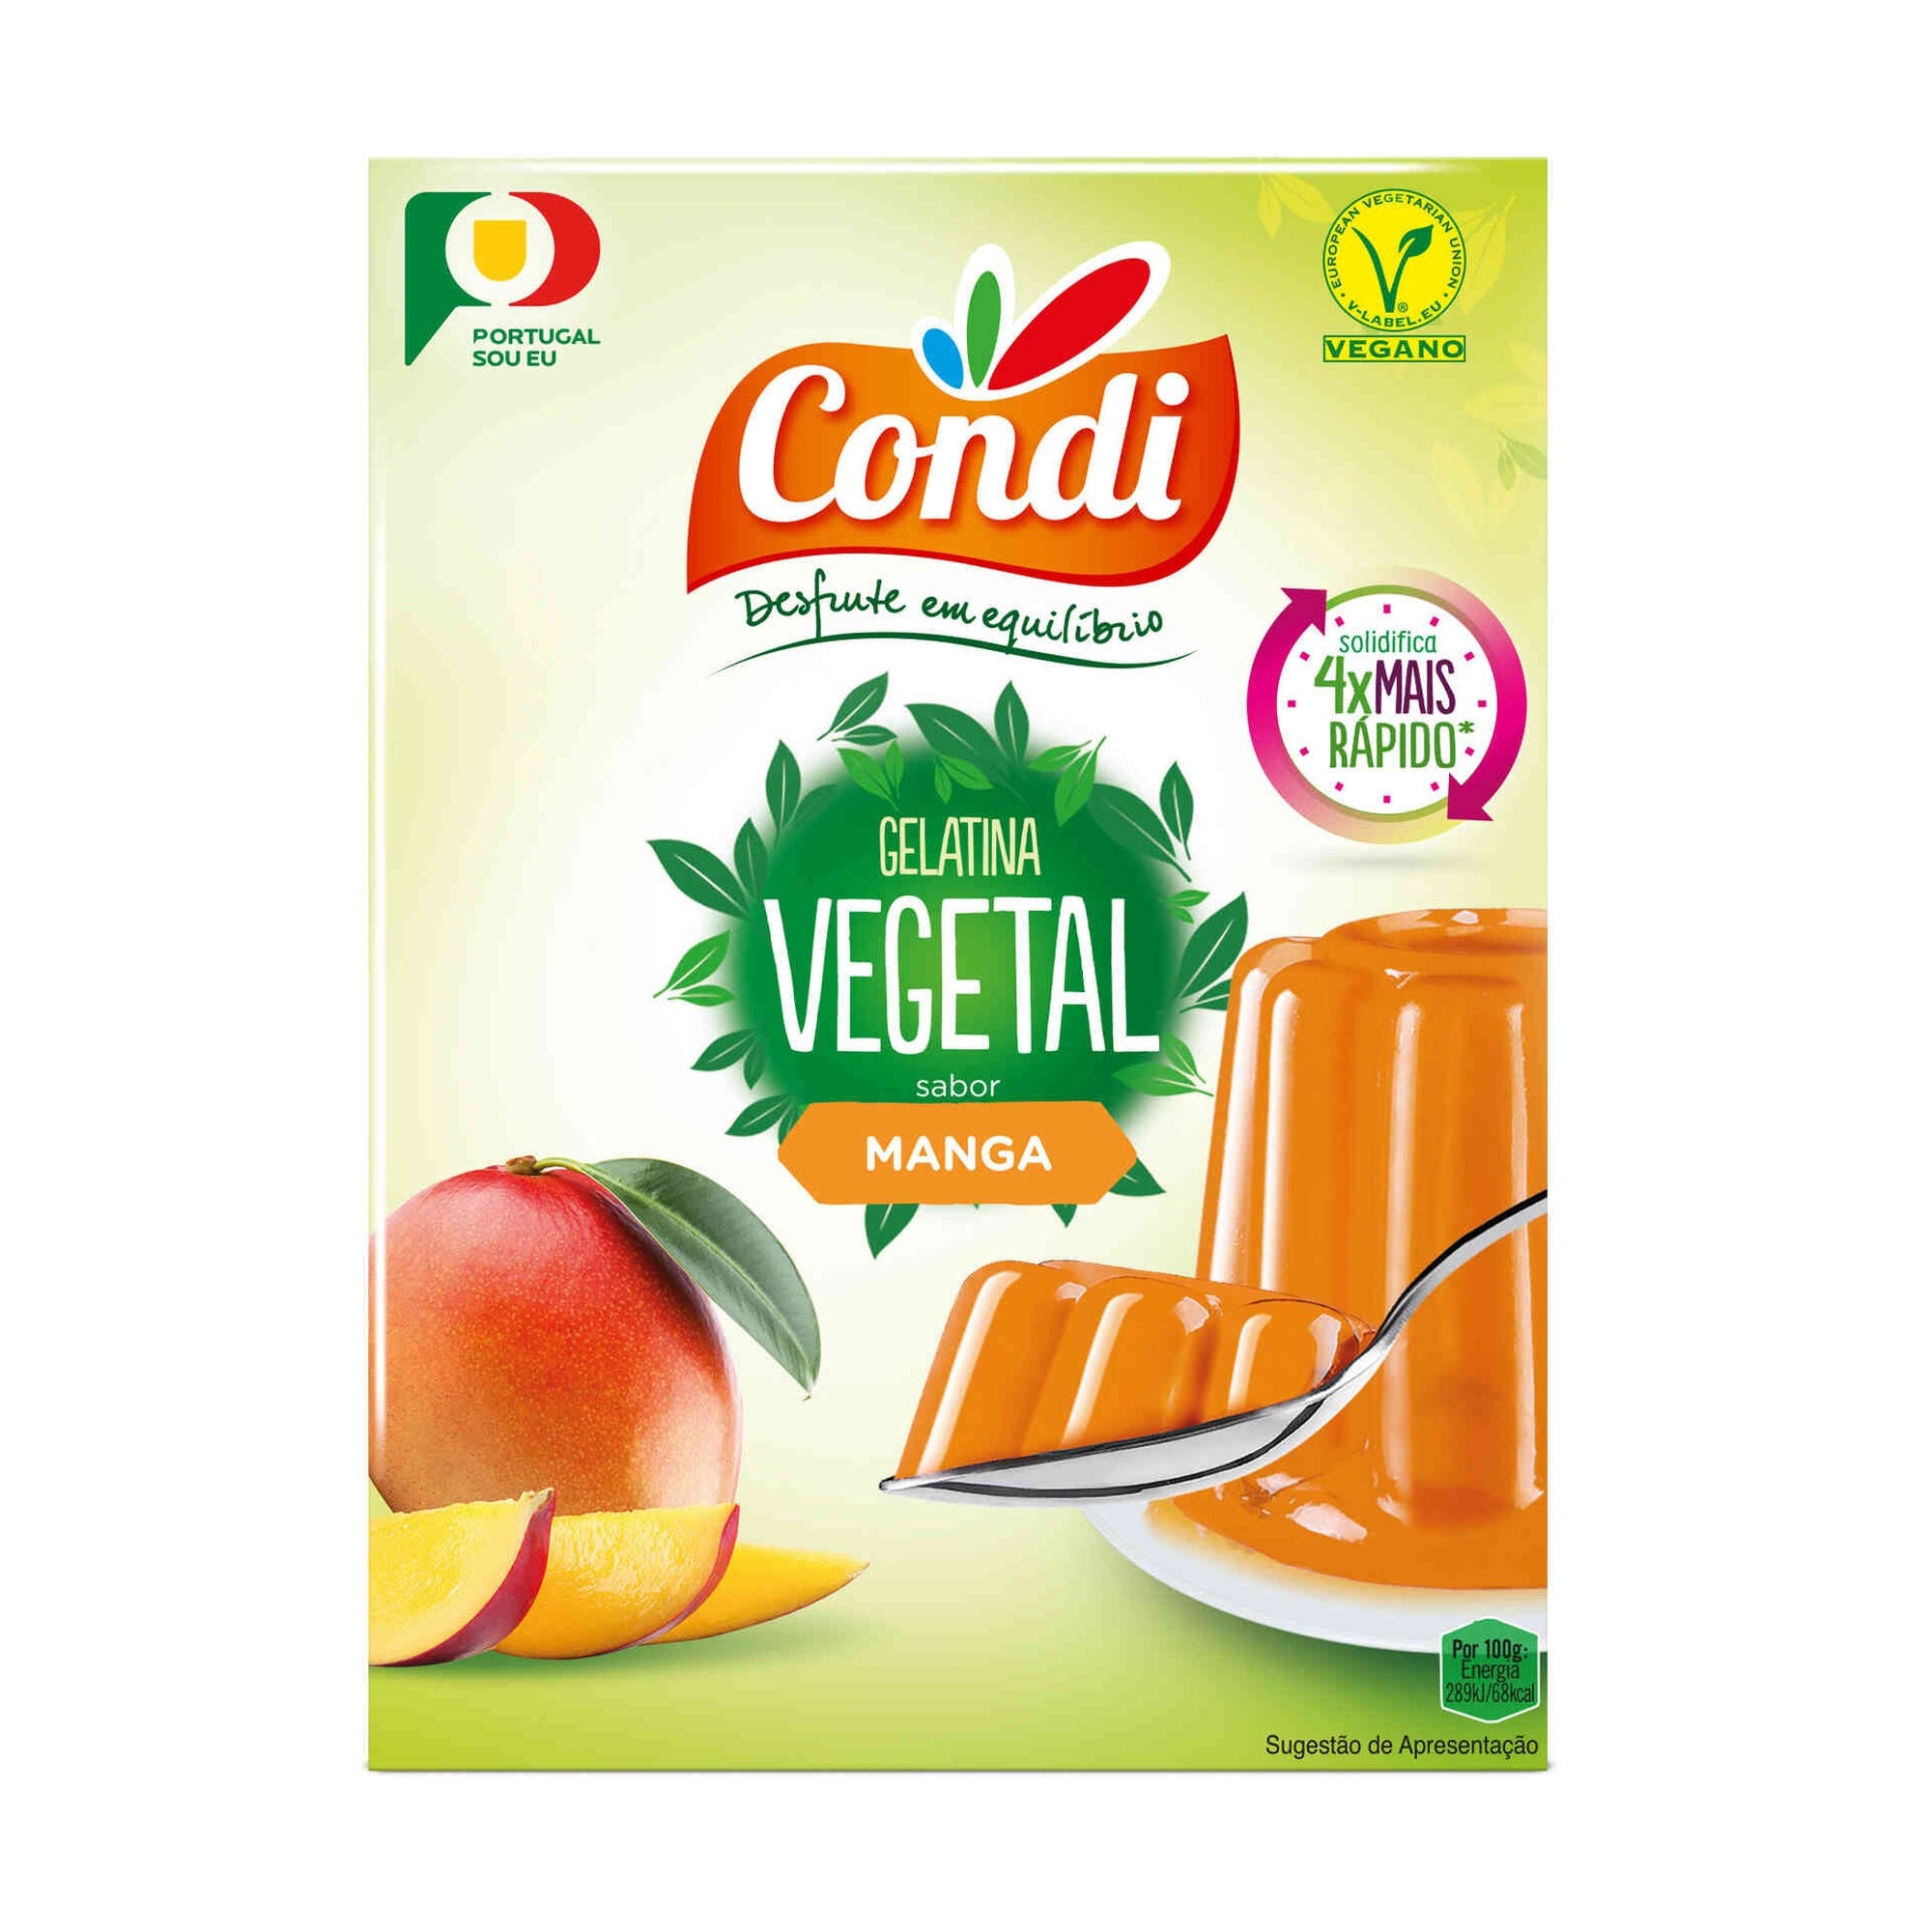 Mango Vegetable Gelatin Powder Condi emb. 180 gr